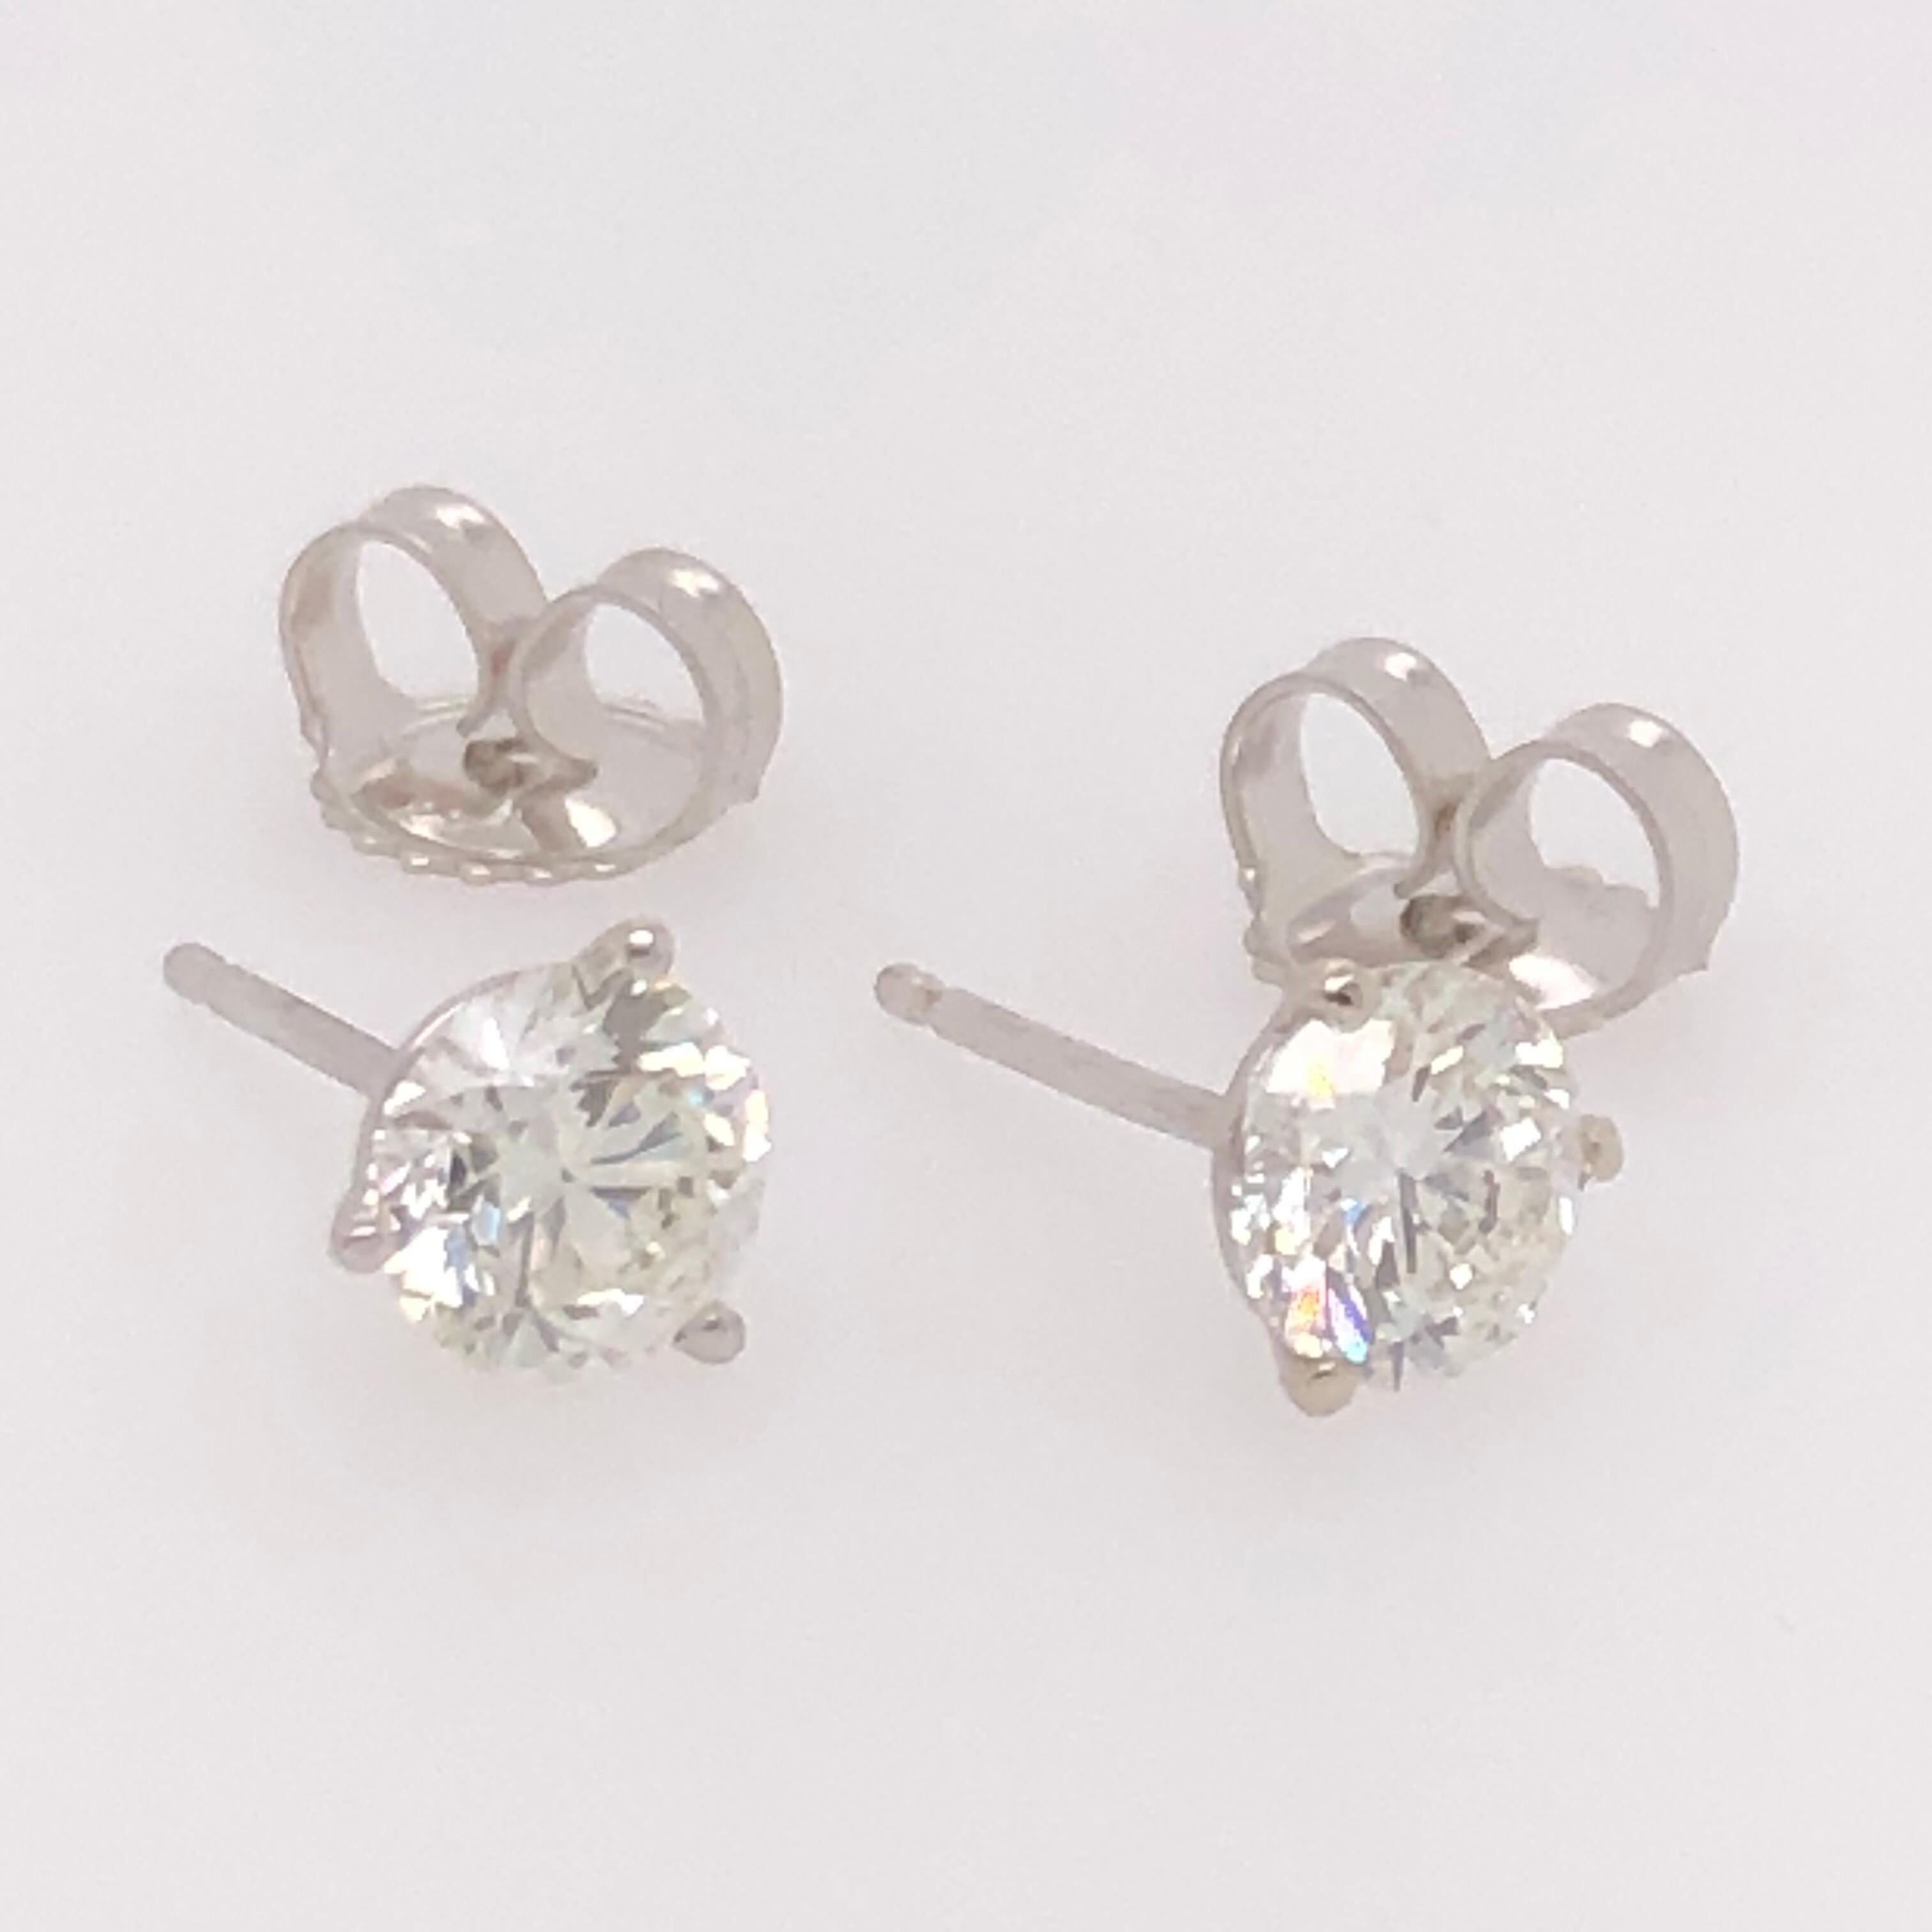 Modern 1.39 Carat Round Cut Diamond and White Gold Diamond Stud Earrings